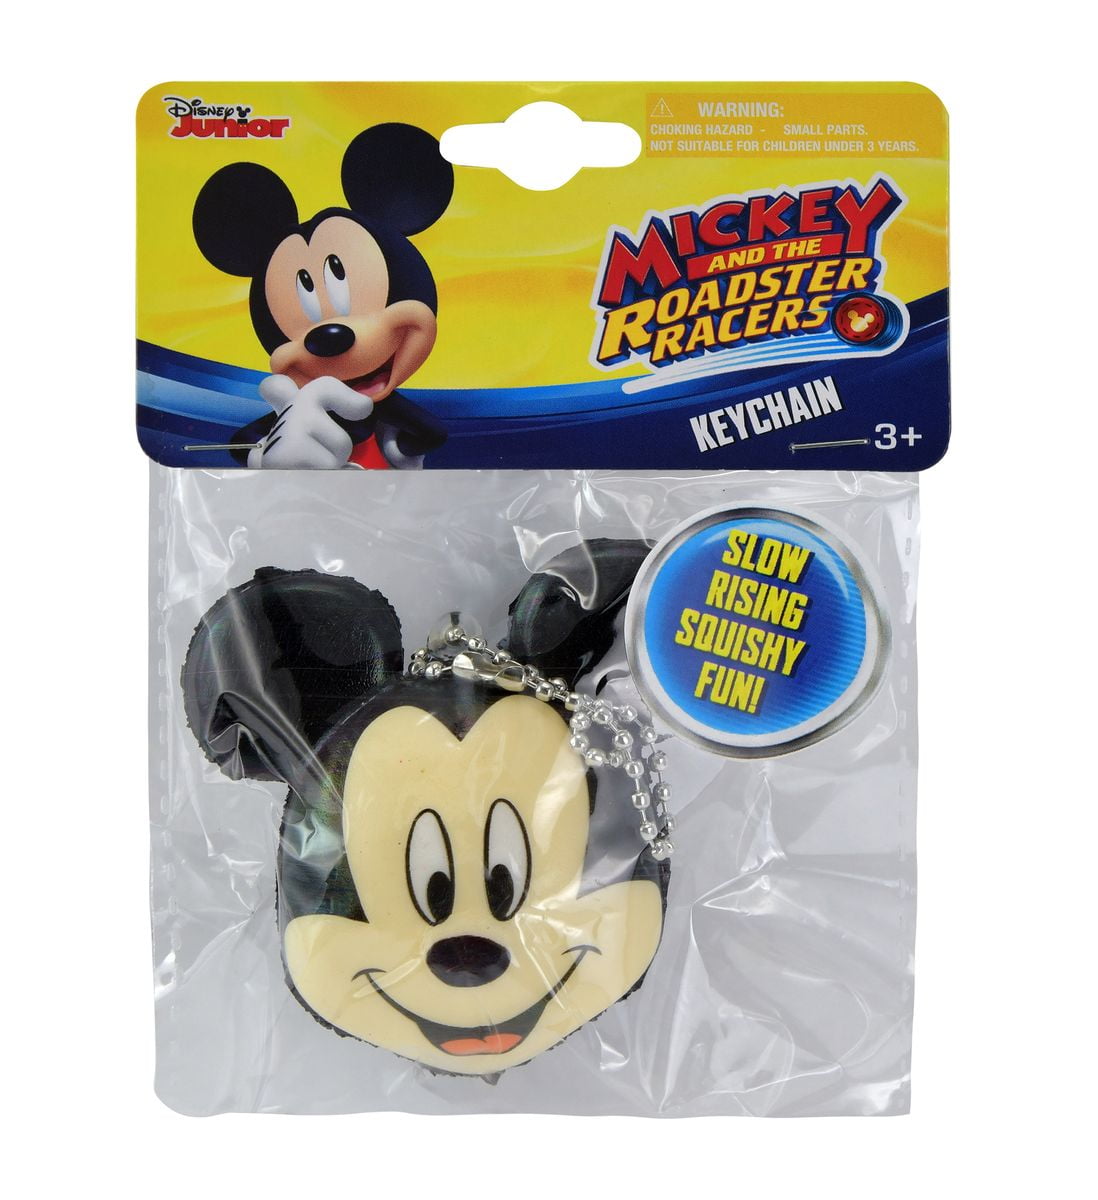  Disney Impulse Squishy Characters 4PK, Includes Mickey